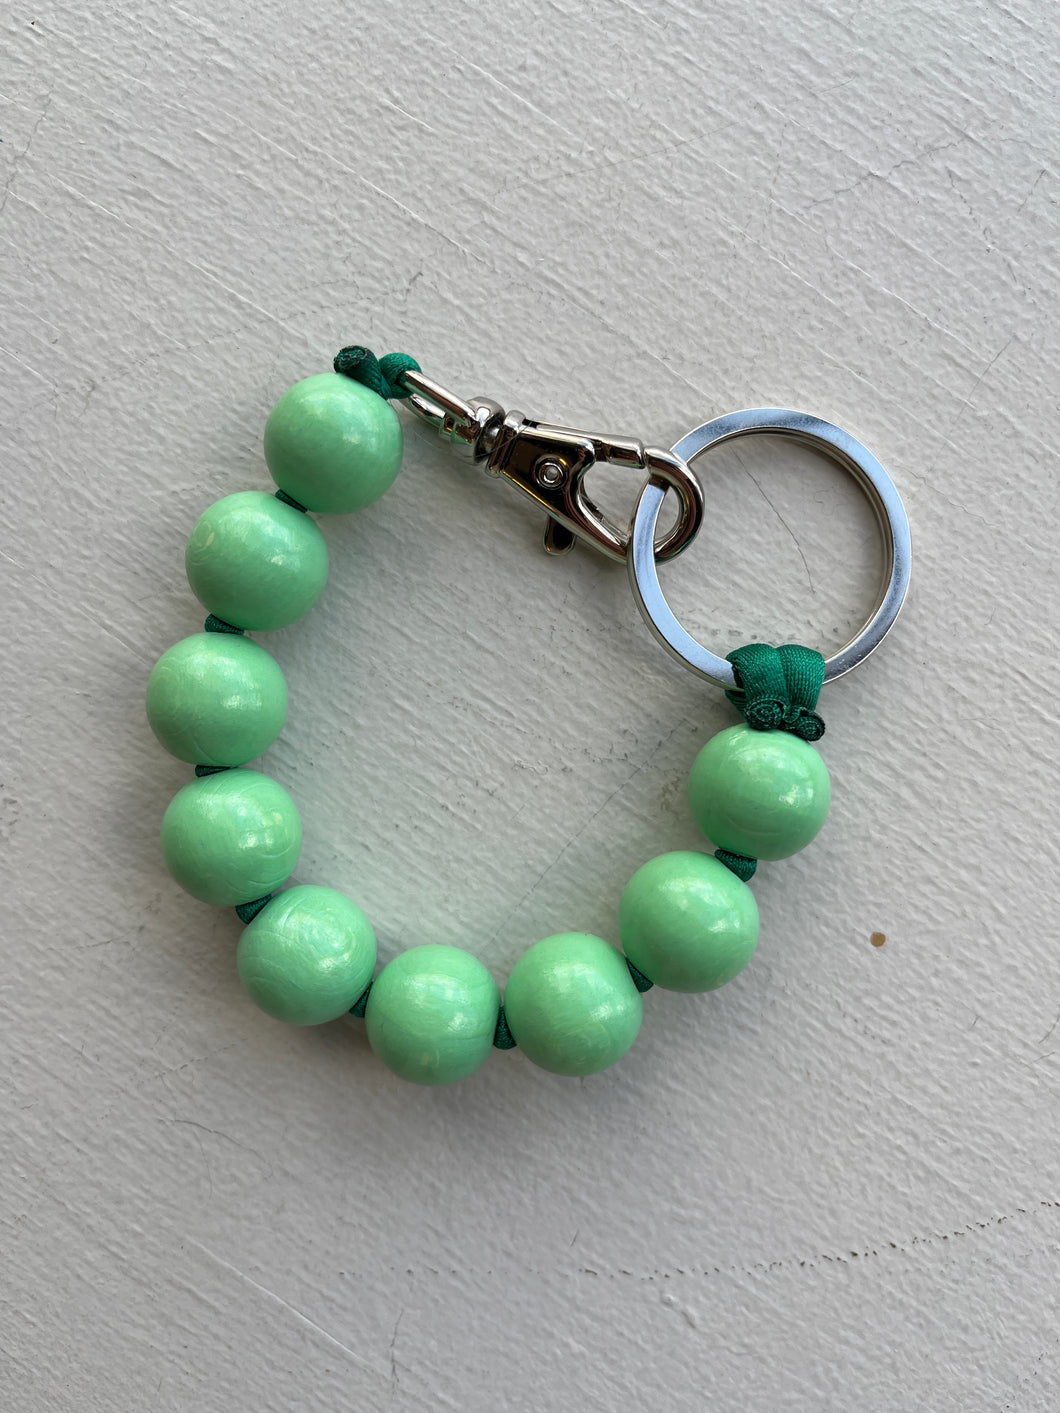 ina seifart - BIG Perlen Short Keyholder - seafoam beads cadmium ribbon